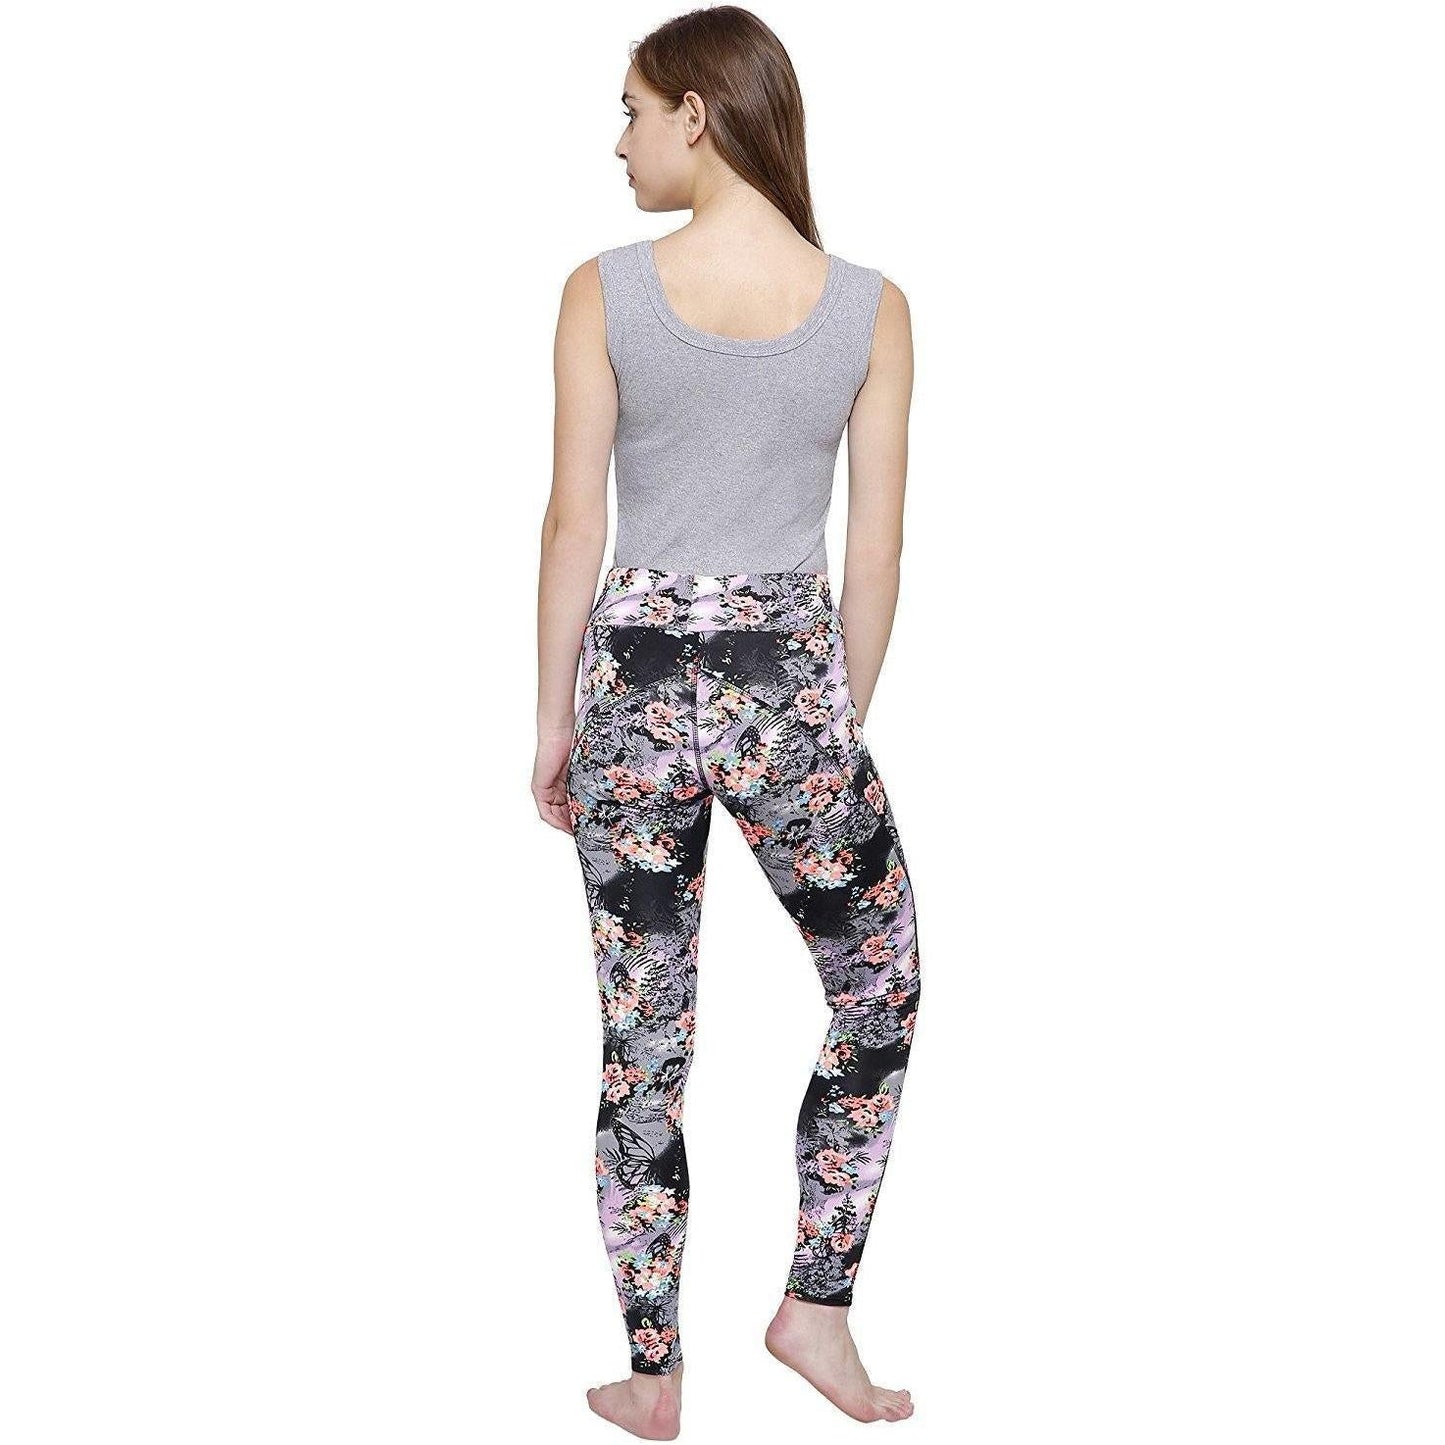 Cathy London Women's  Printed Stretchable Sports Yoga Track Pant Gym  legging